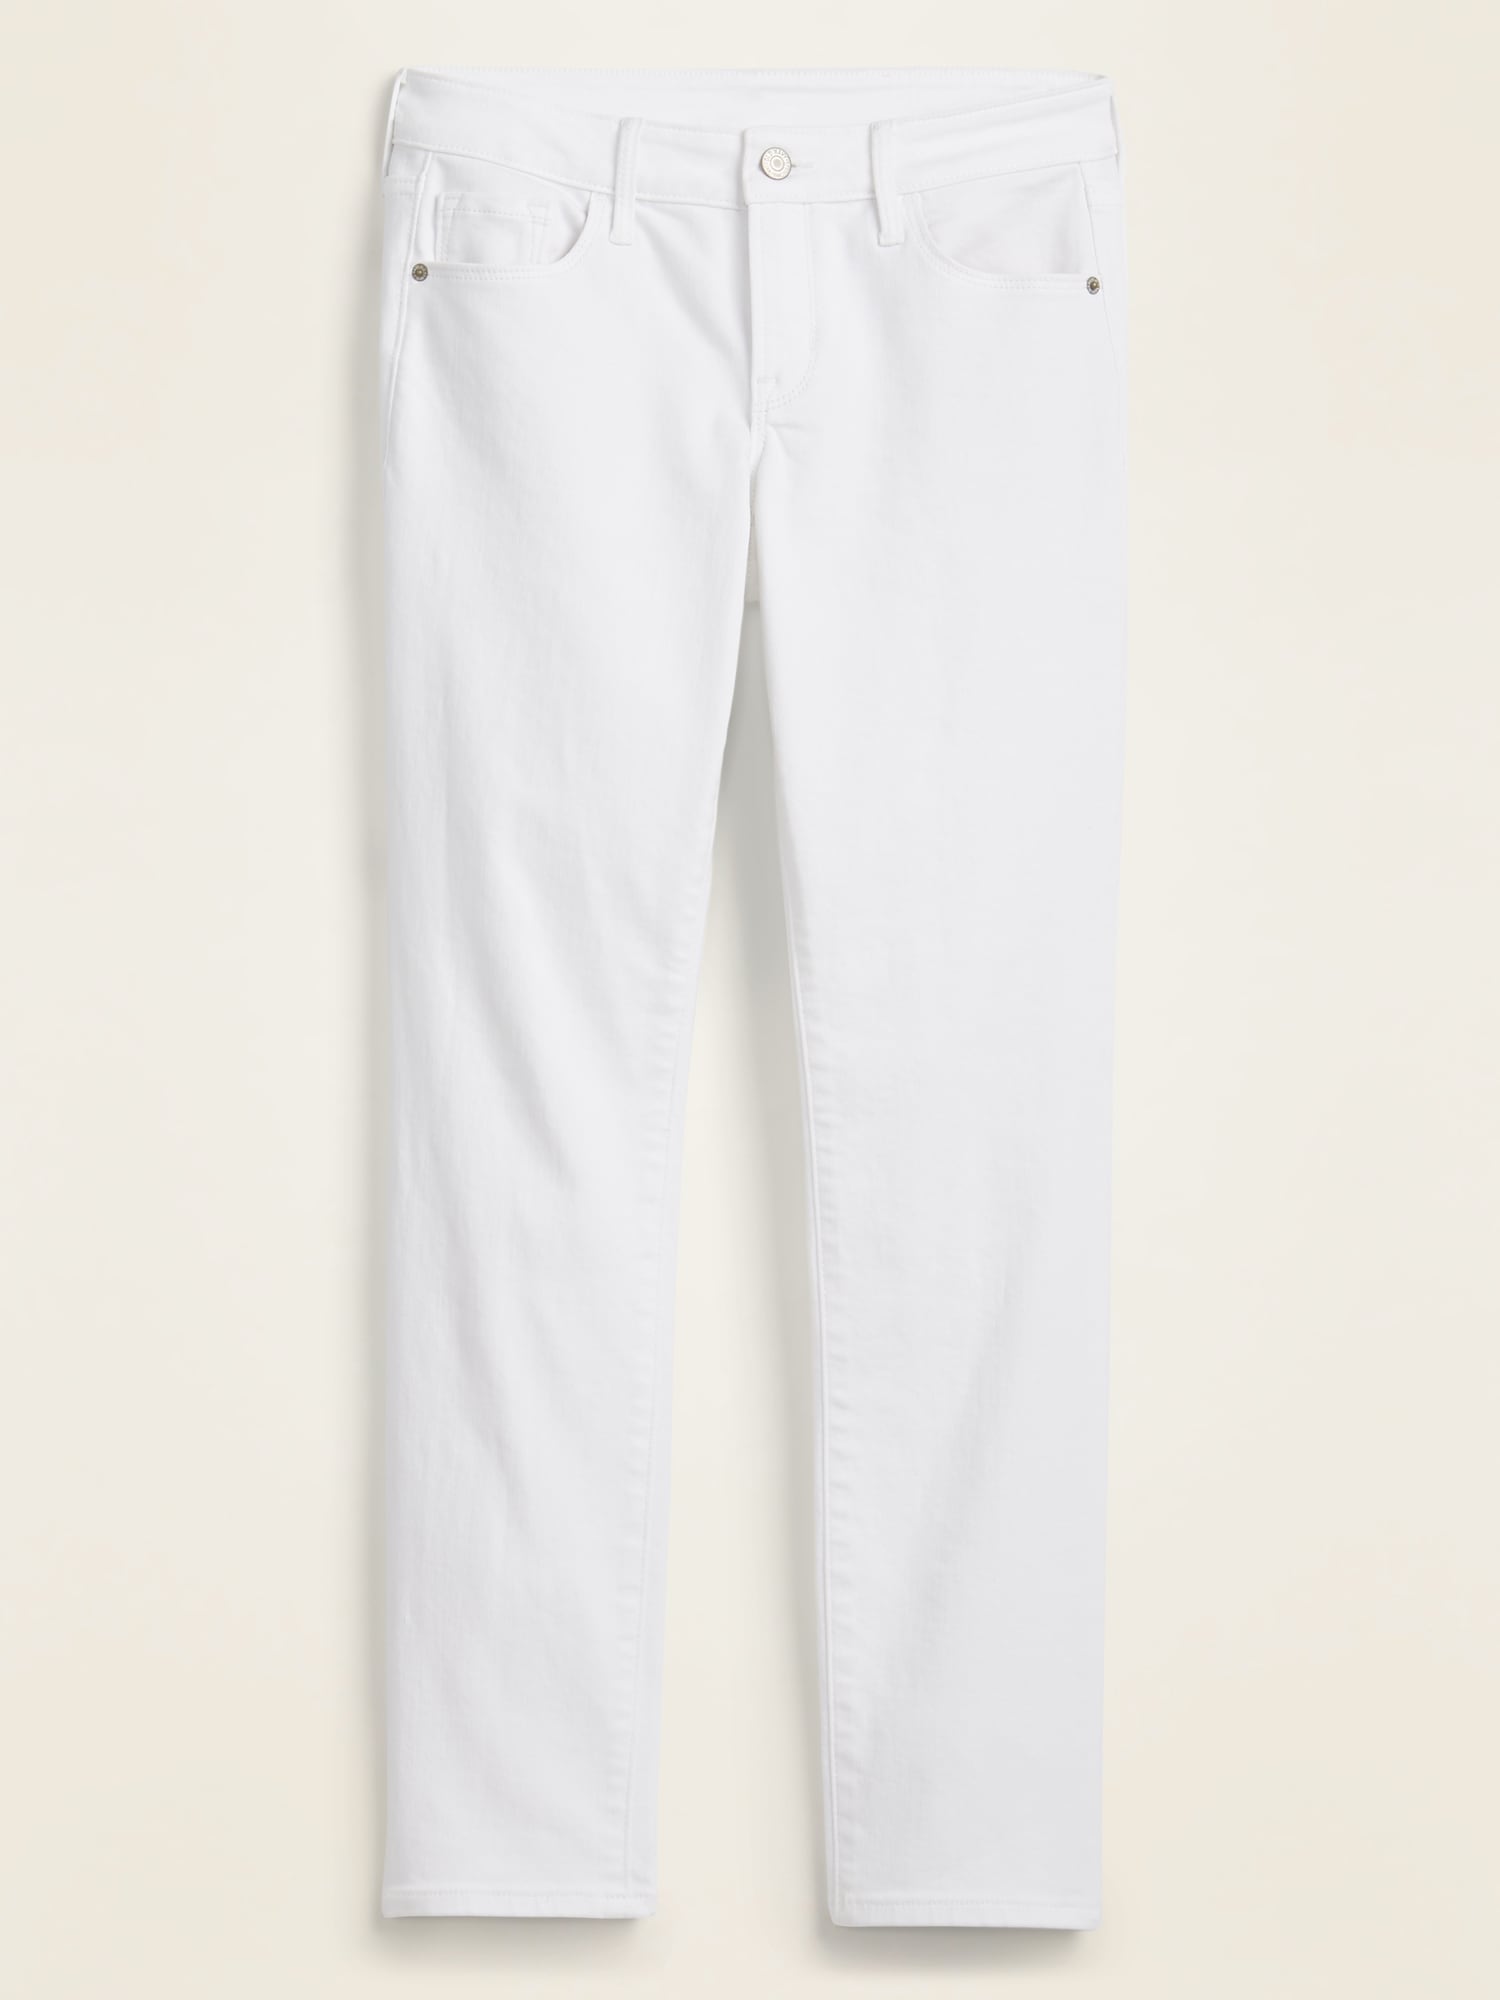 white jeans online